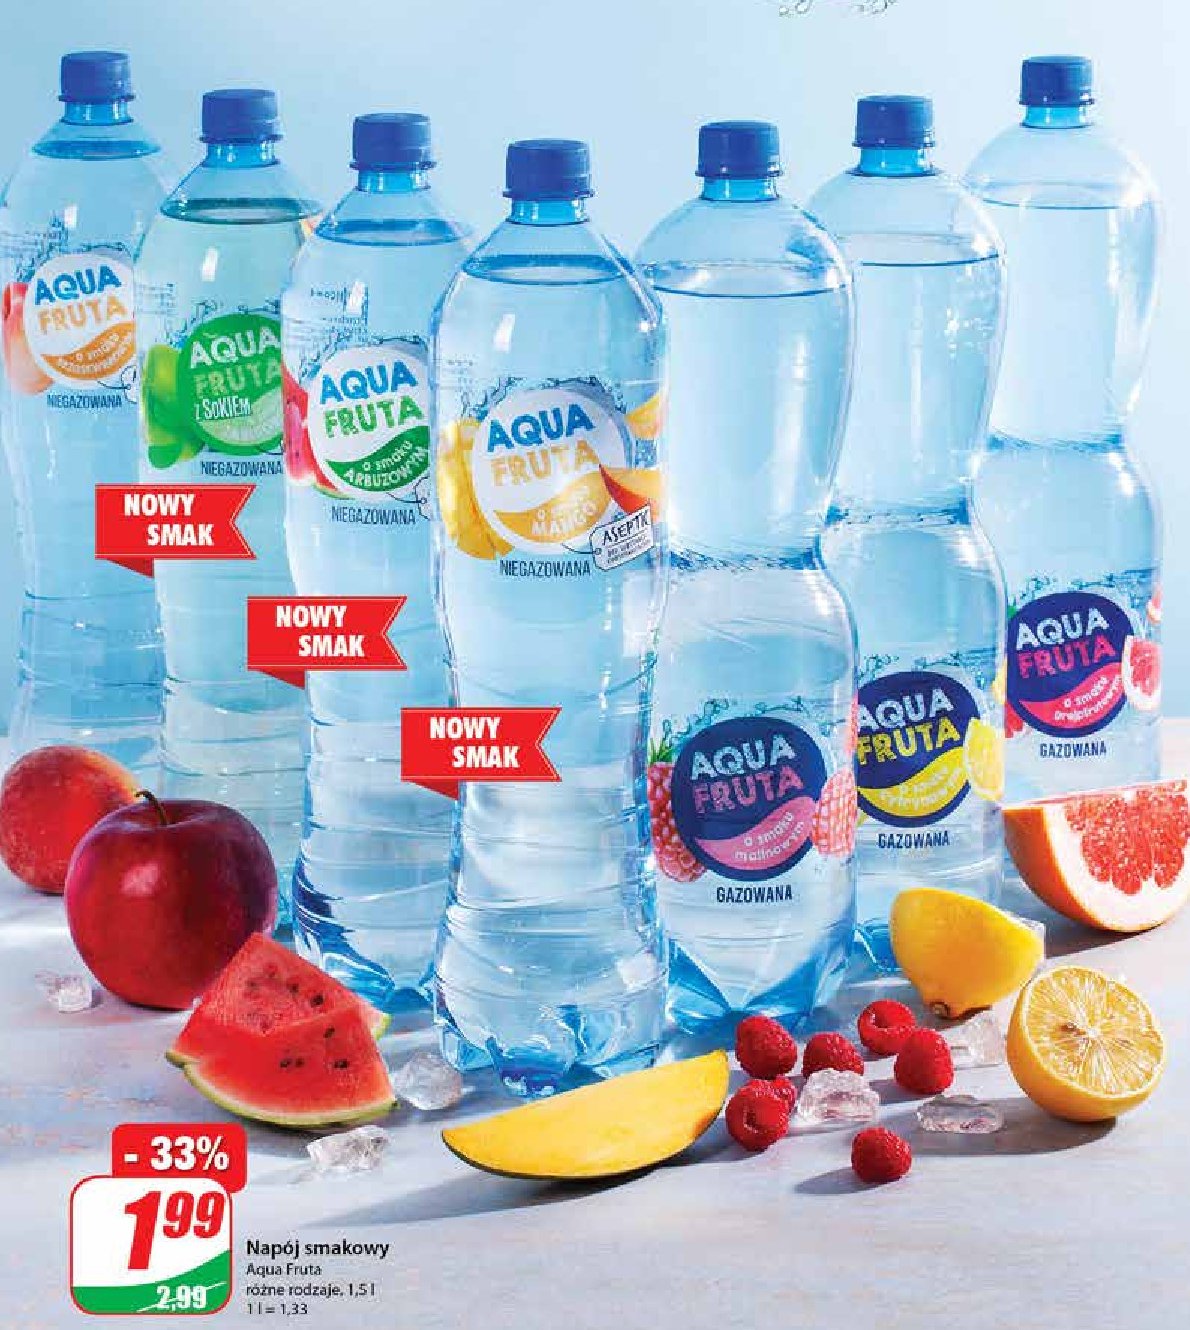 Woda o smaku mango Aqua fruta promocja